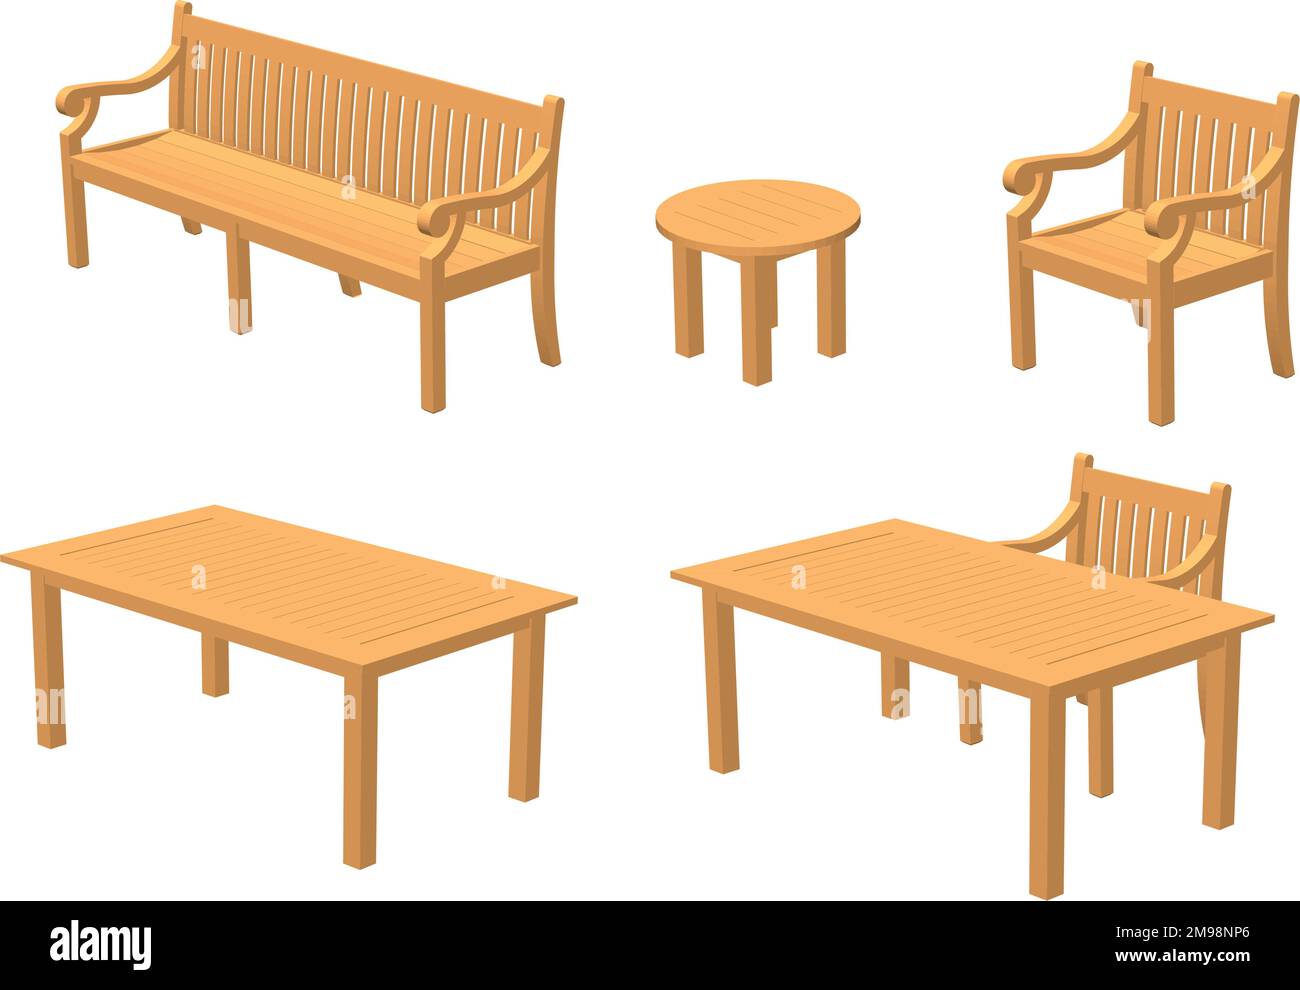 Outdoor wooden furniture set illustration Stock Vector